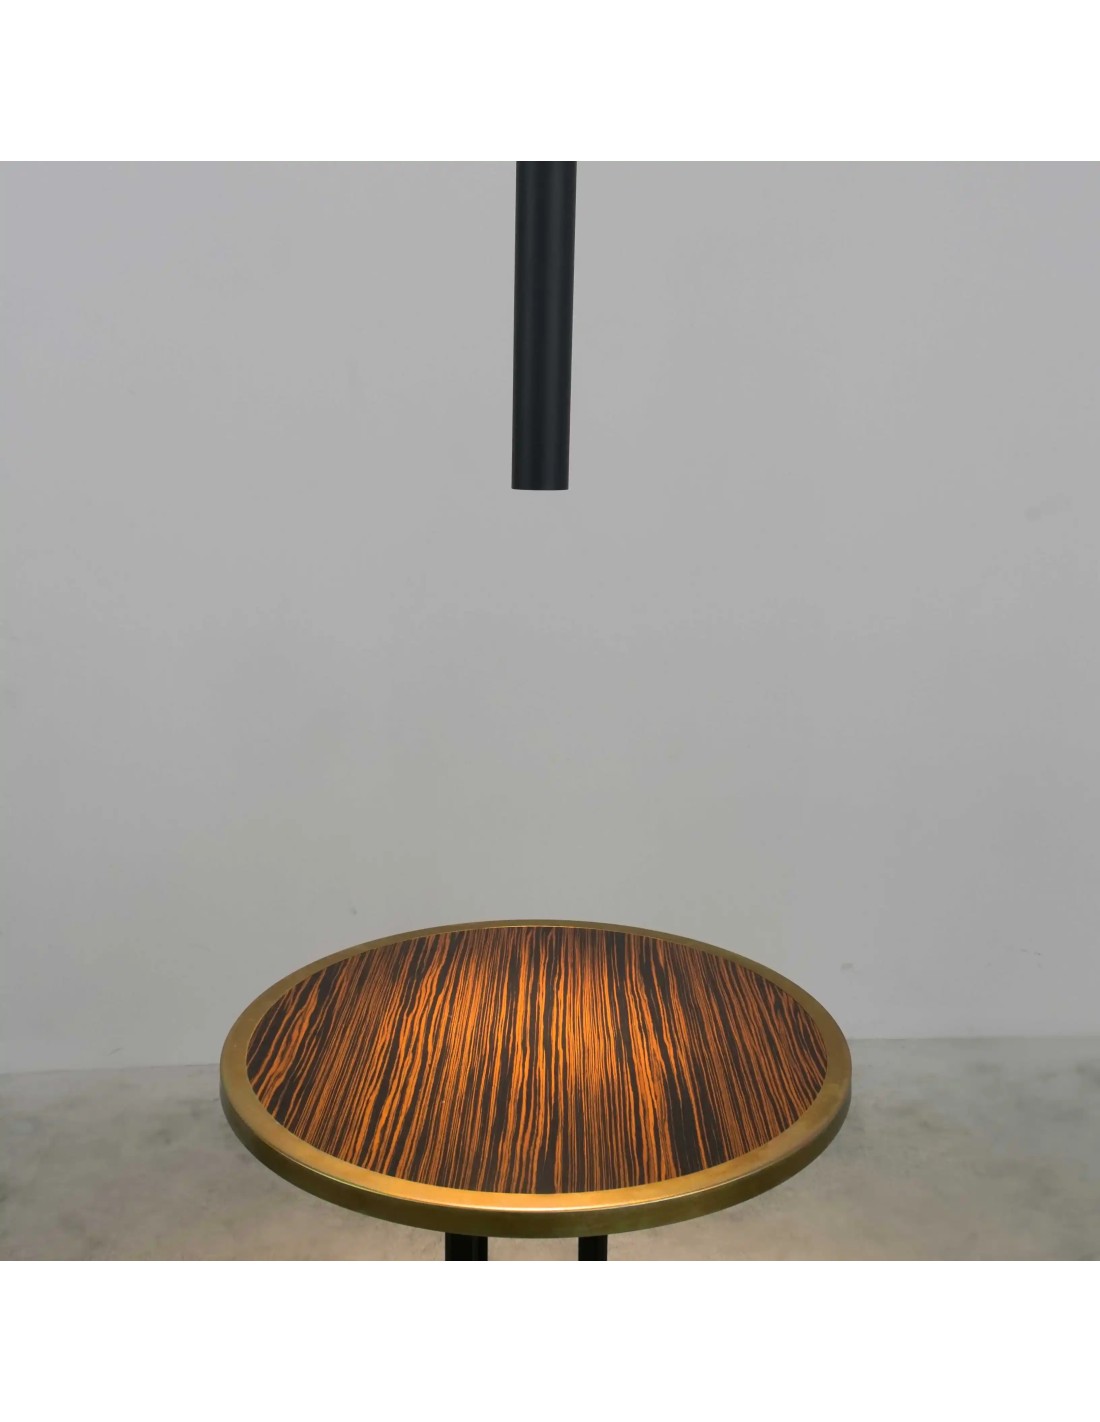 lámparas vintage ideal para colocas sobre mesas